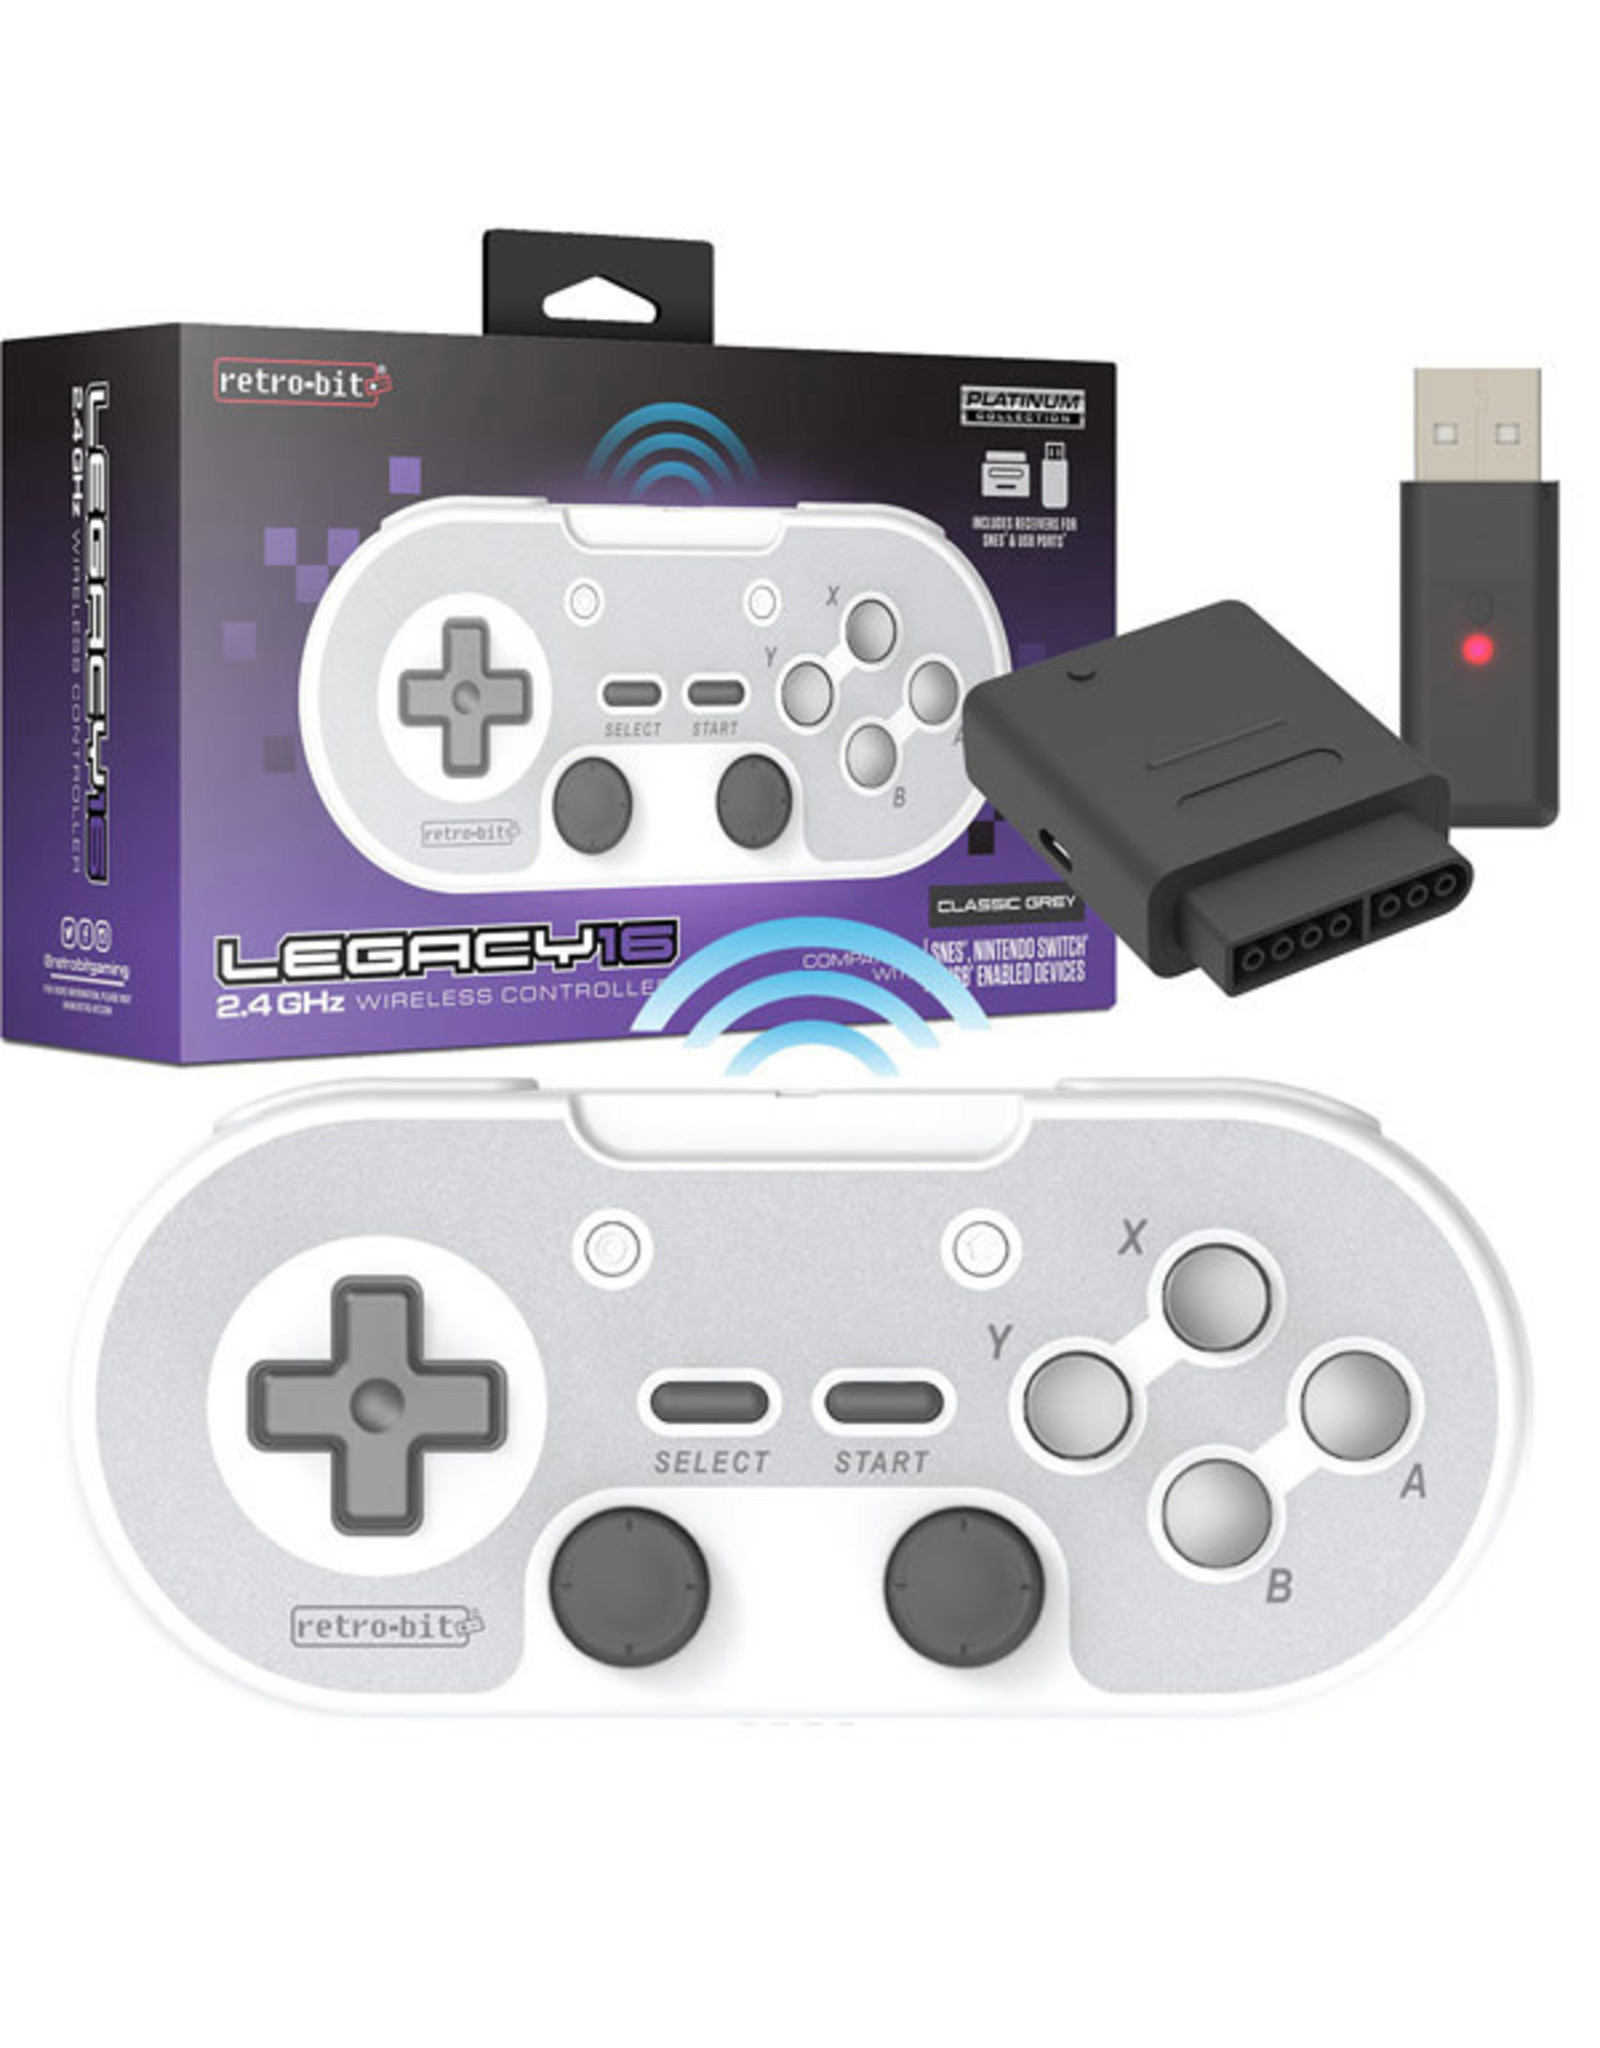 Retro-Bit retro-bit - Super Nintendo (SNES) - Legacy16 (Classic Grey) [2.4GHz Wireless Controller]